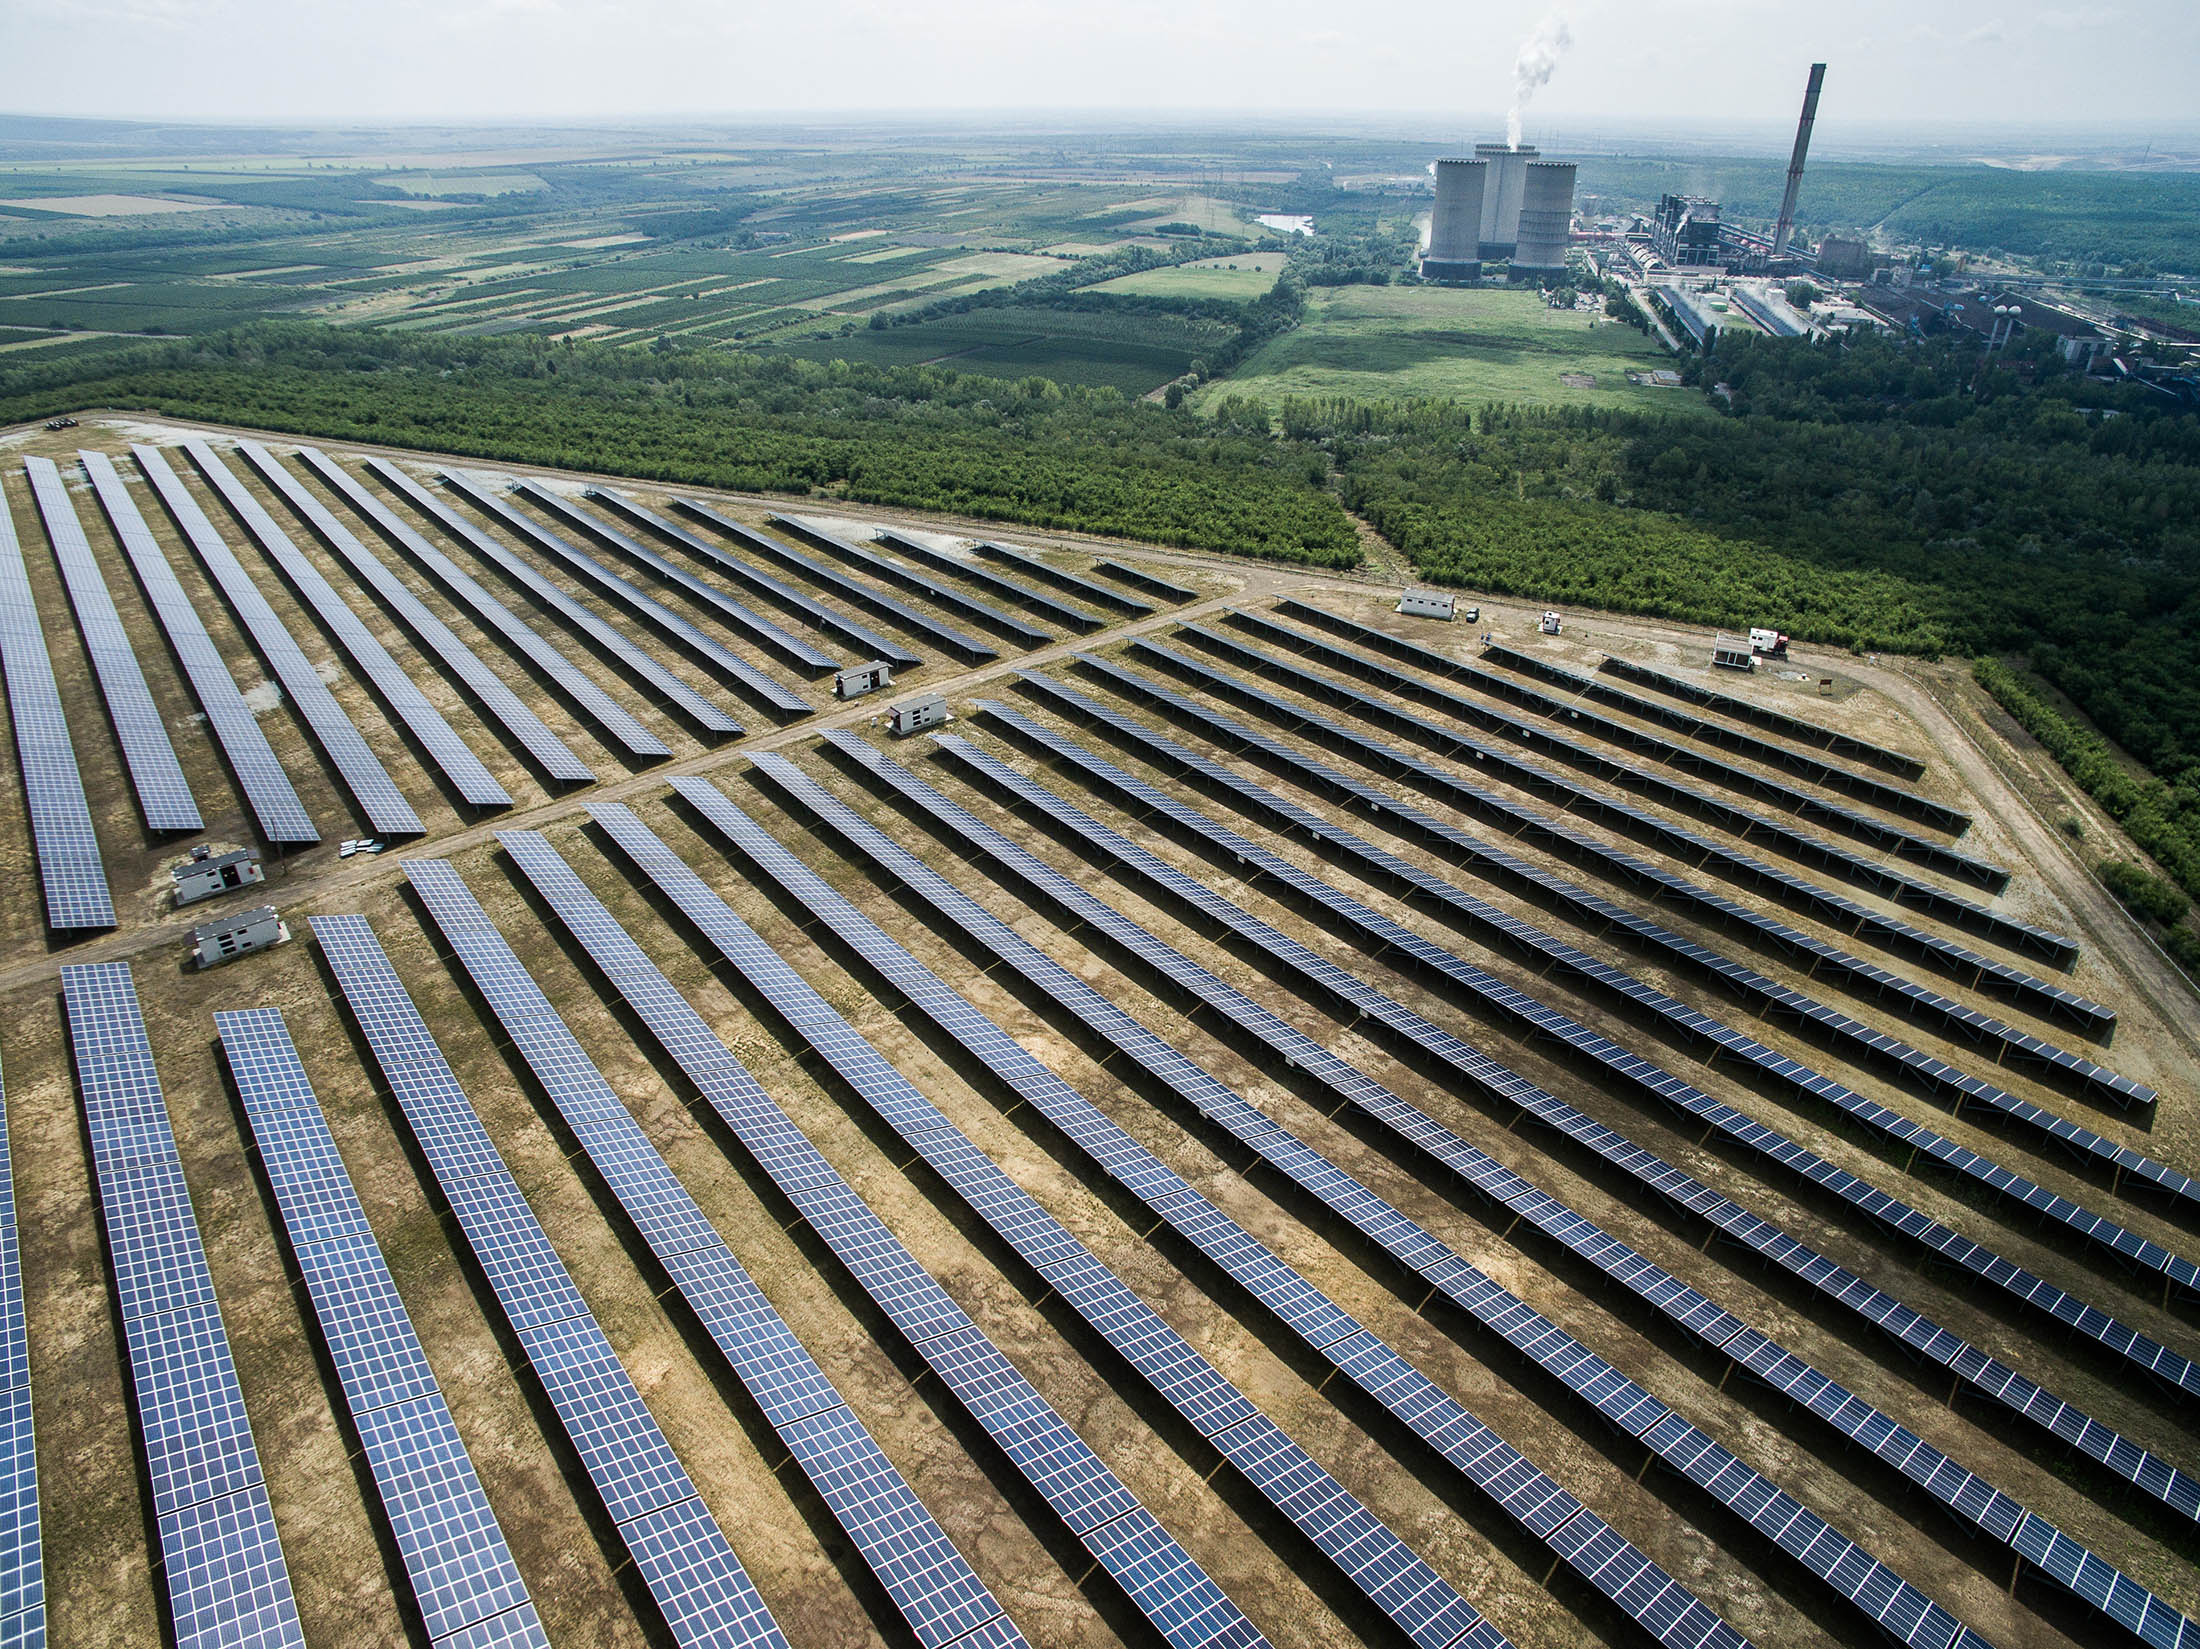 Photovoltaic solar panels sit in an array at the 16-megawatt Visonta solar power station.
